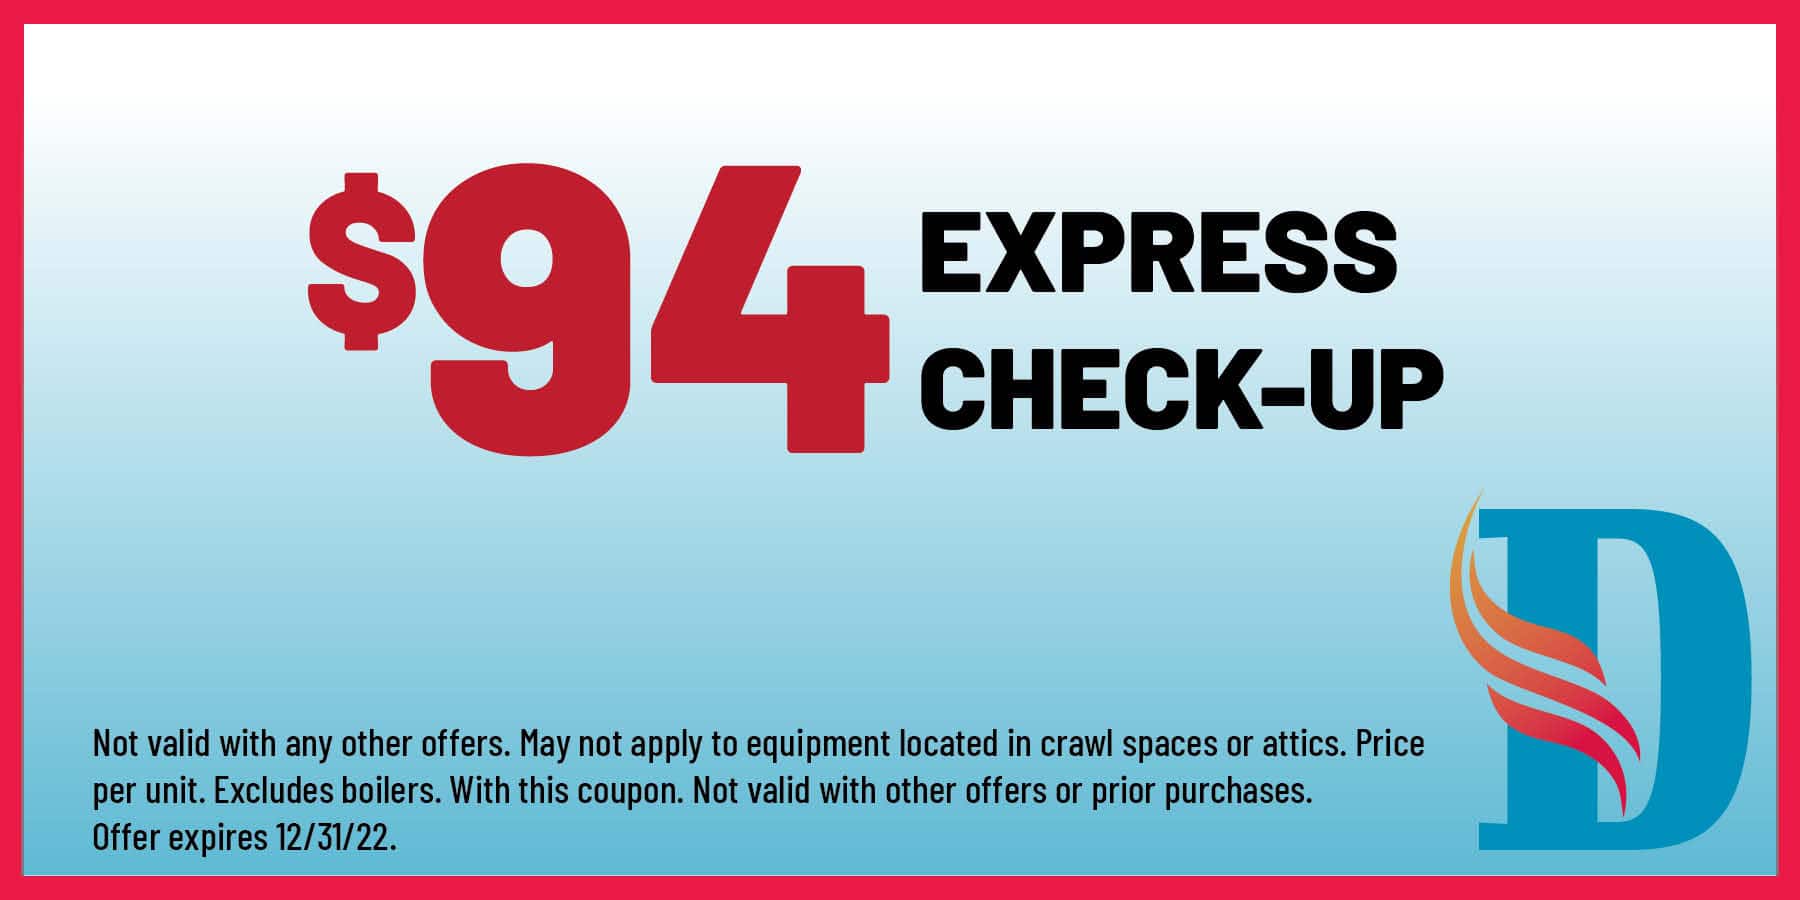  express check up coupon.